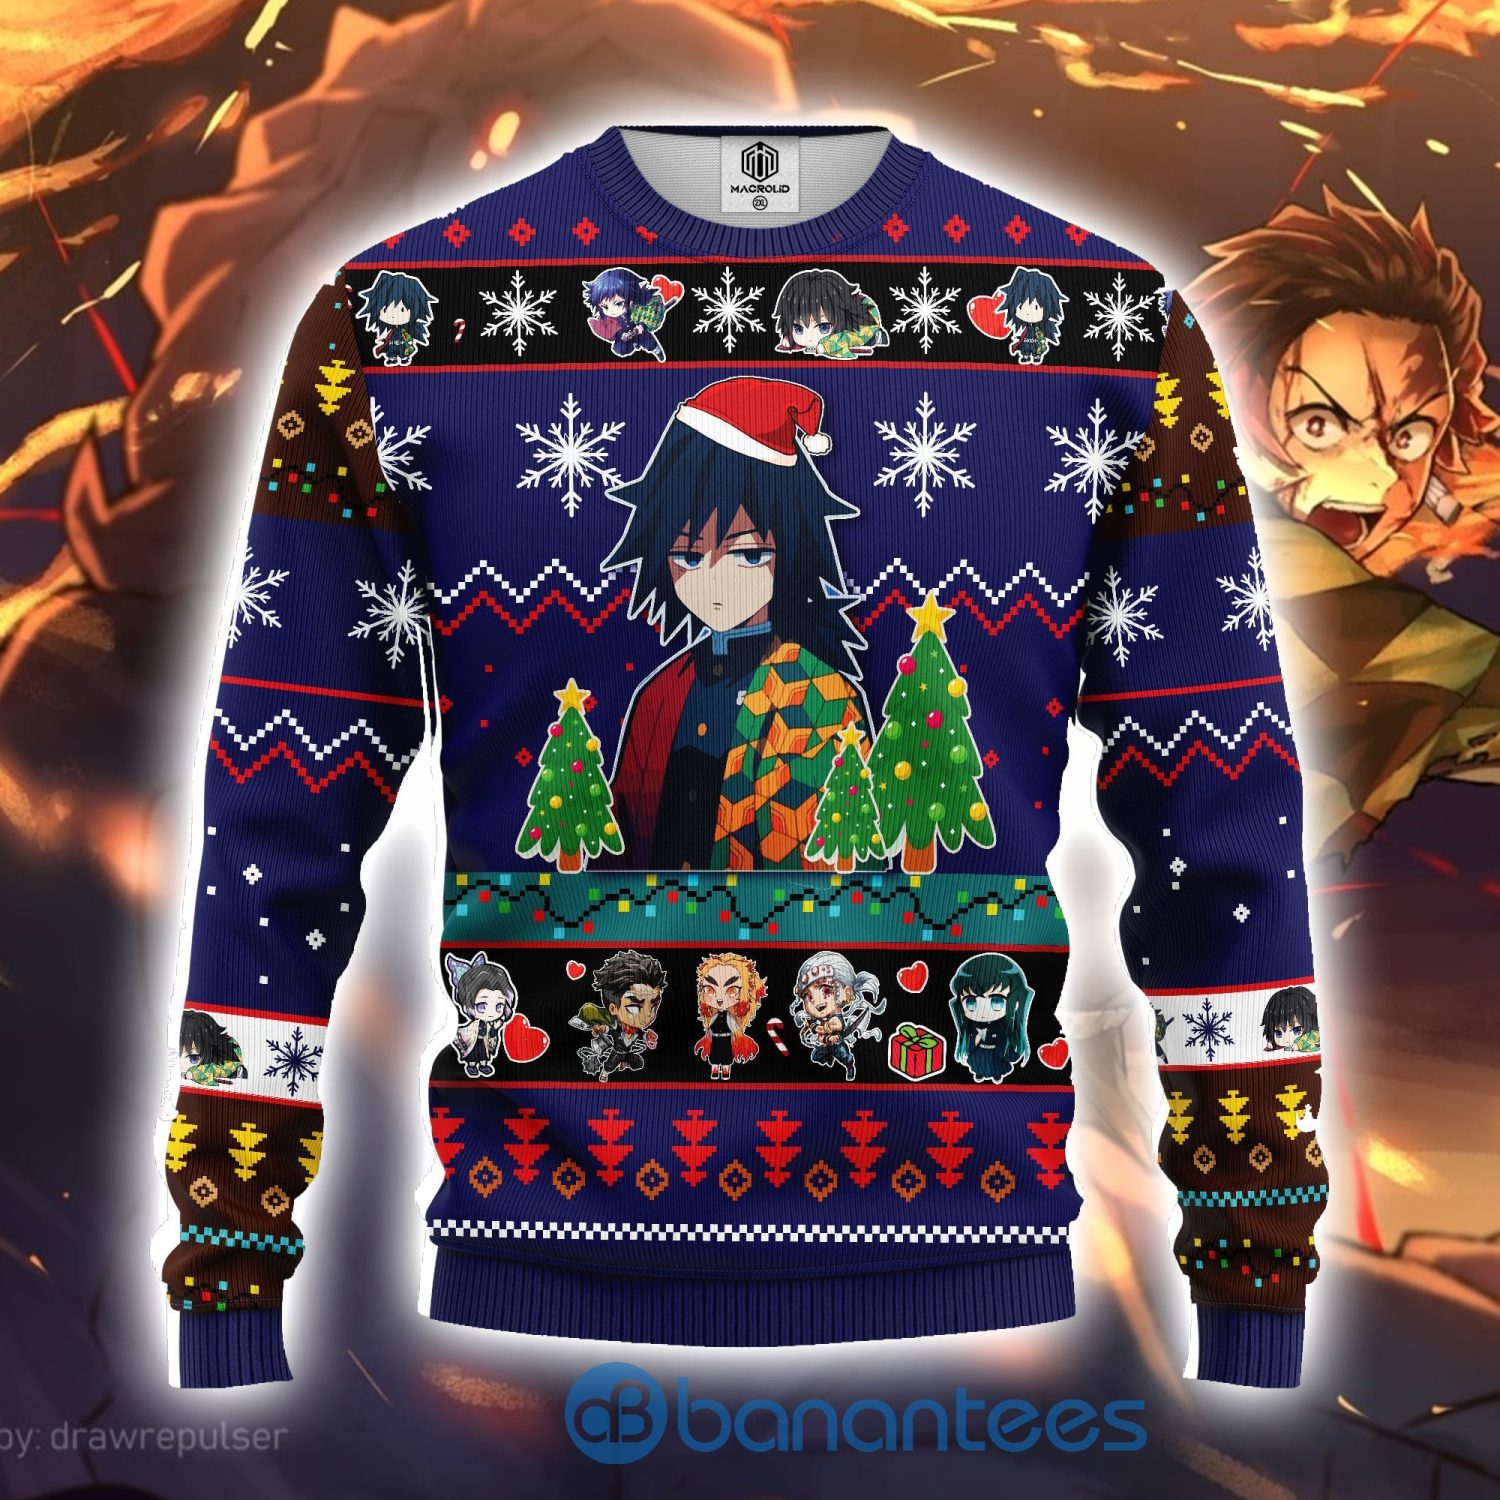 2 Giyu Tomioka Christmas Sweater Designs